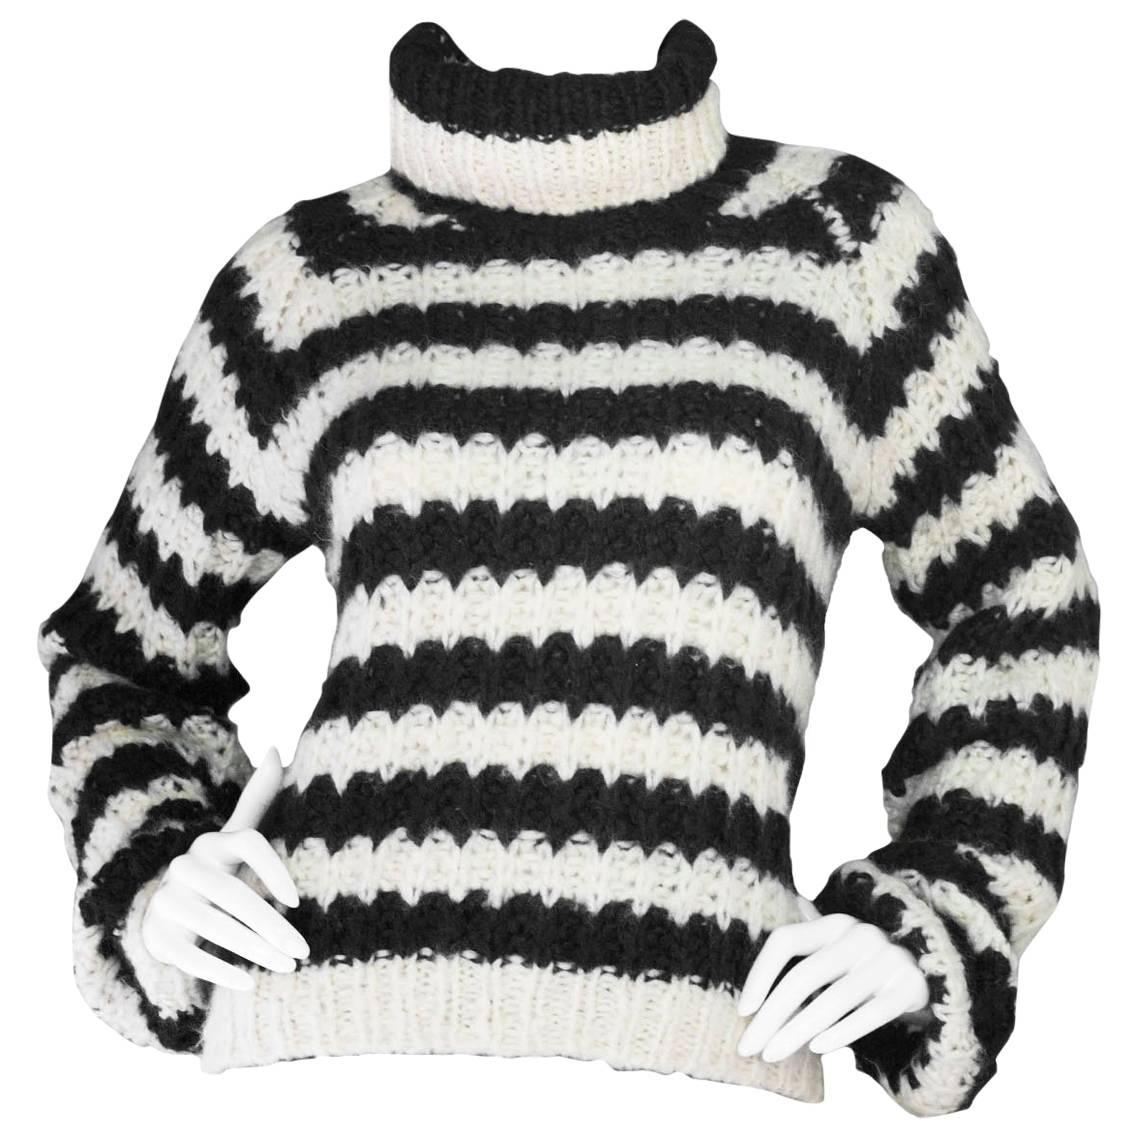 Chloe Cream & Navy Wool Turtleneck Knit Sweater sz S rt. $415